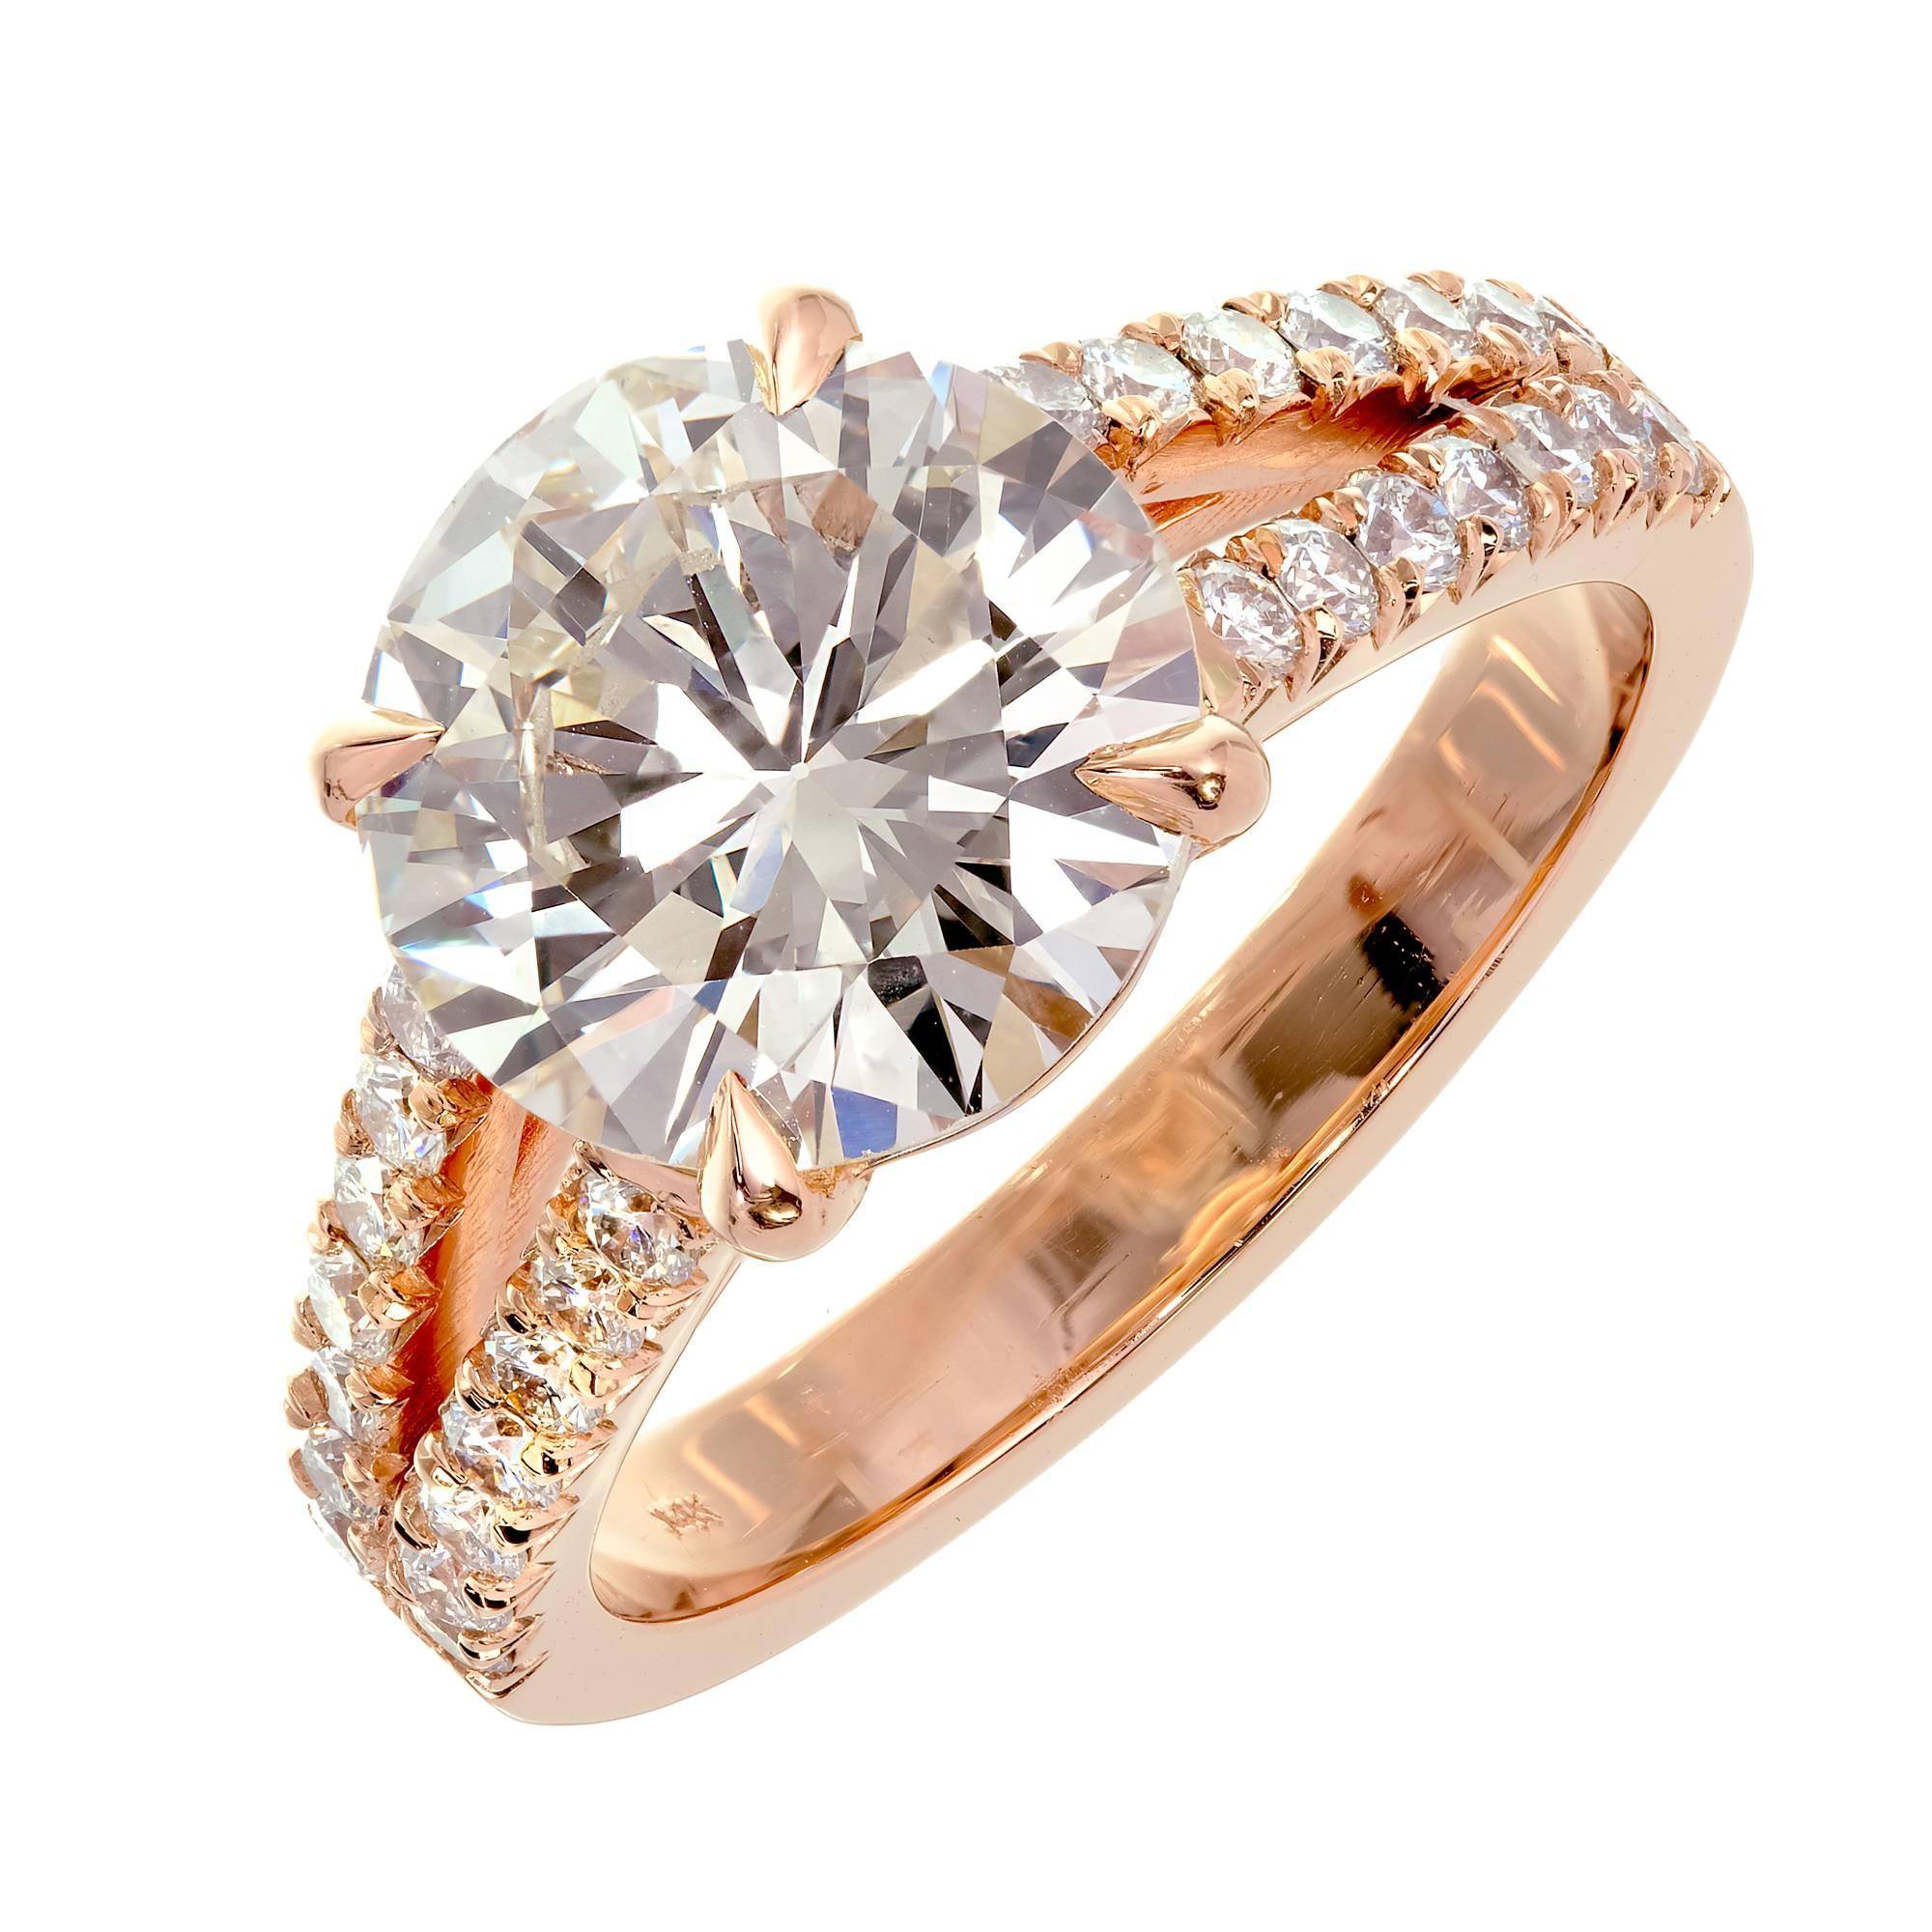 Peter Suchy GIA Certified 3.01 Carat Diamond Rose Gold Engagement Ring